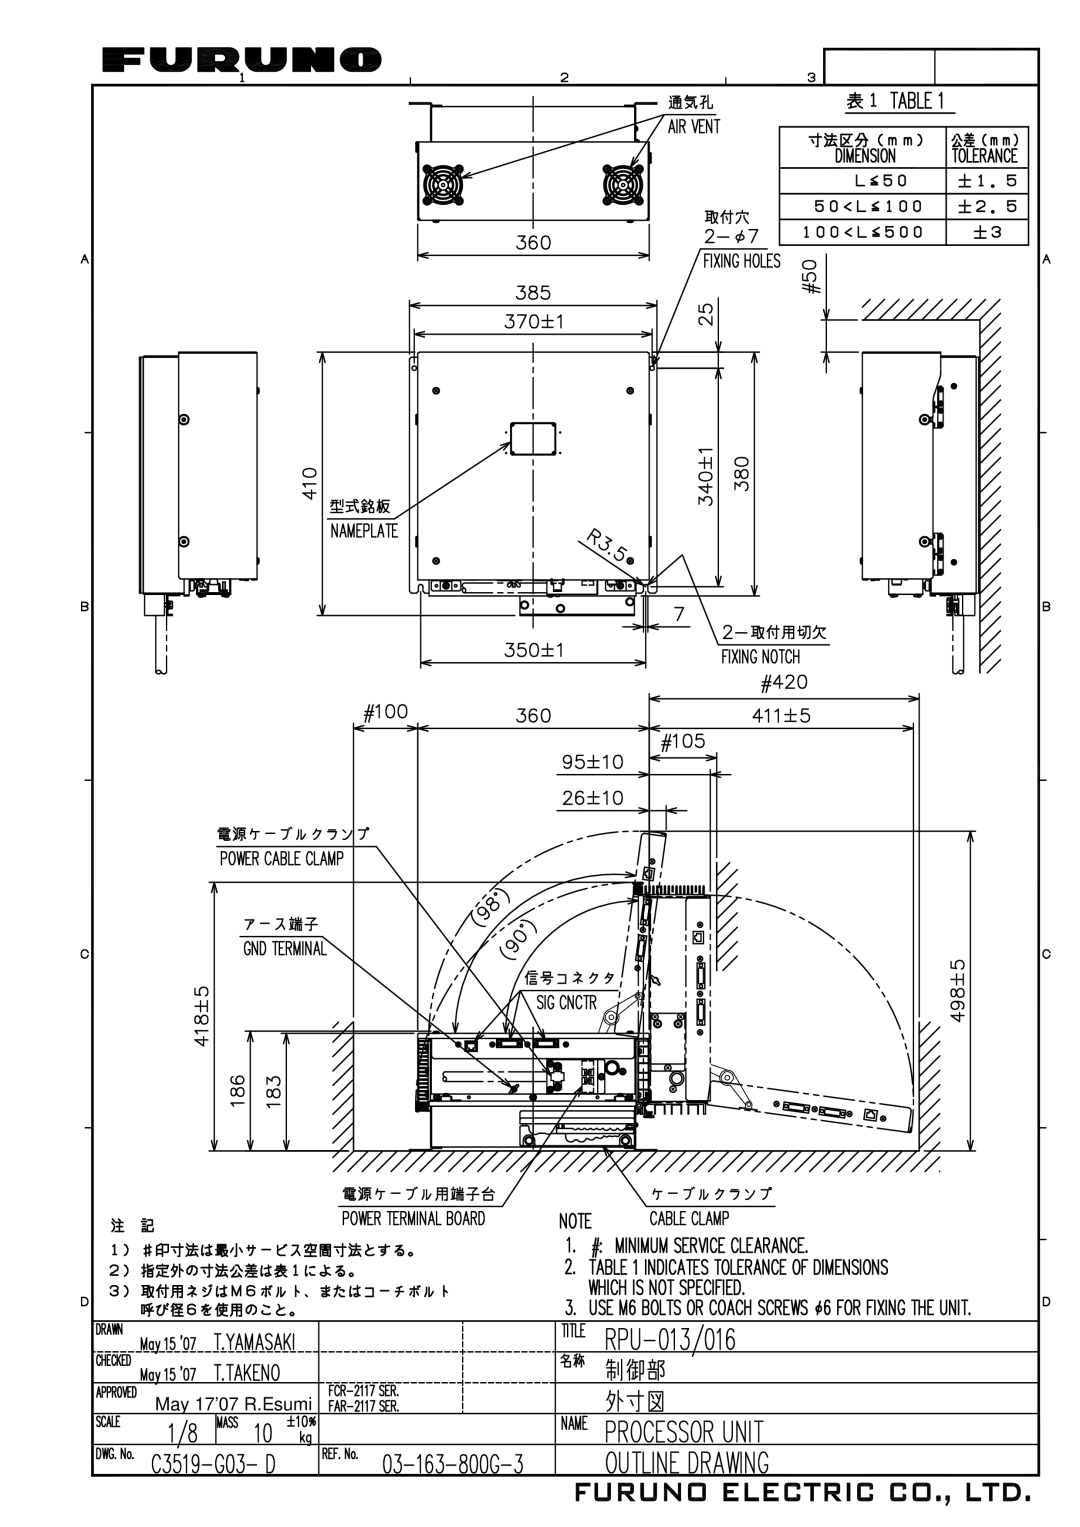 Furuno FAR-2157 installation manual May 1707 R.Esumi 